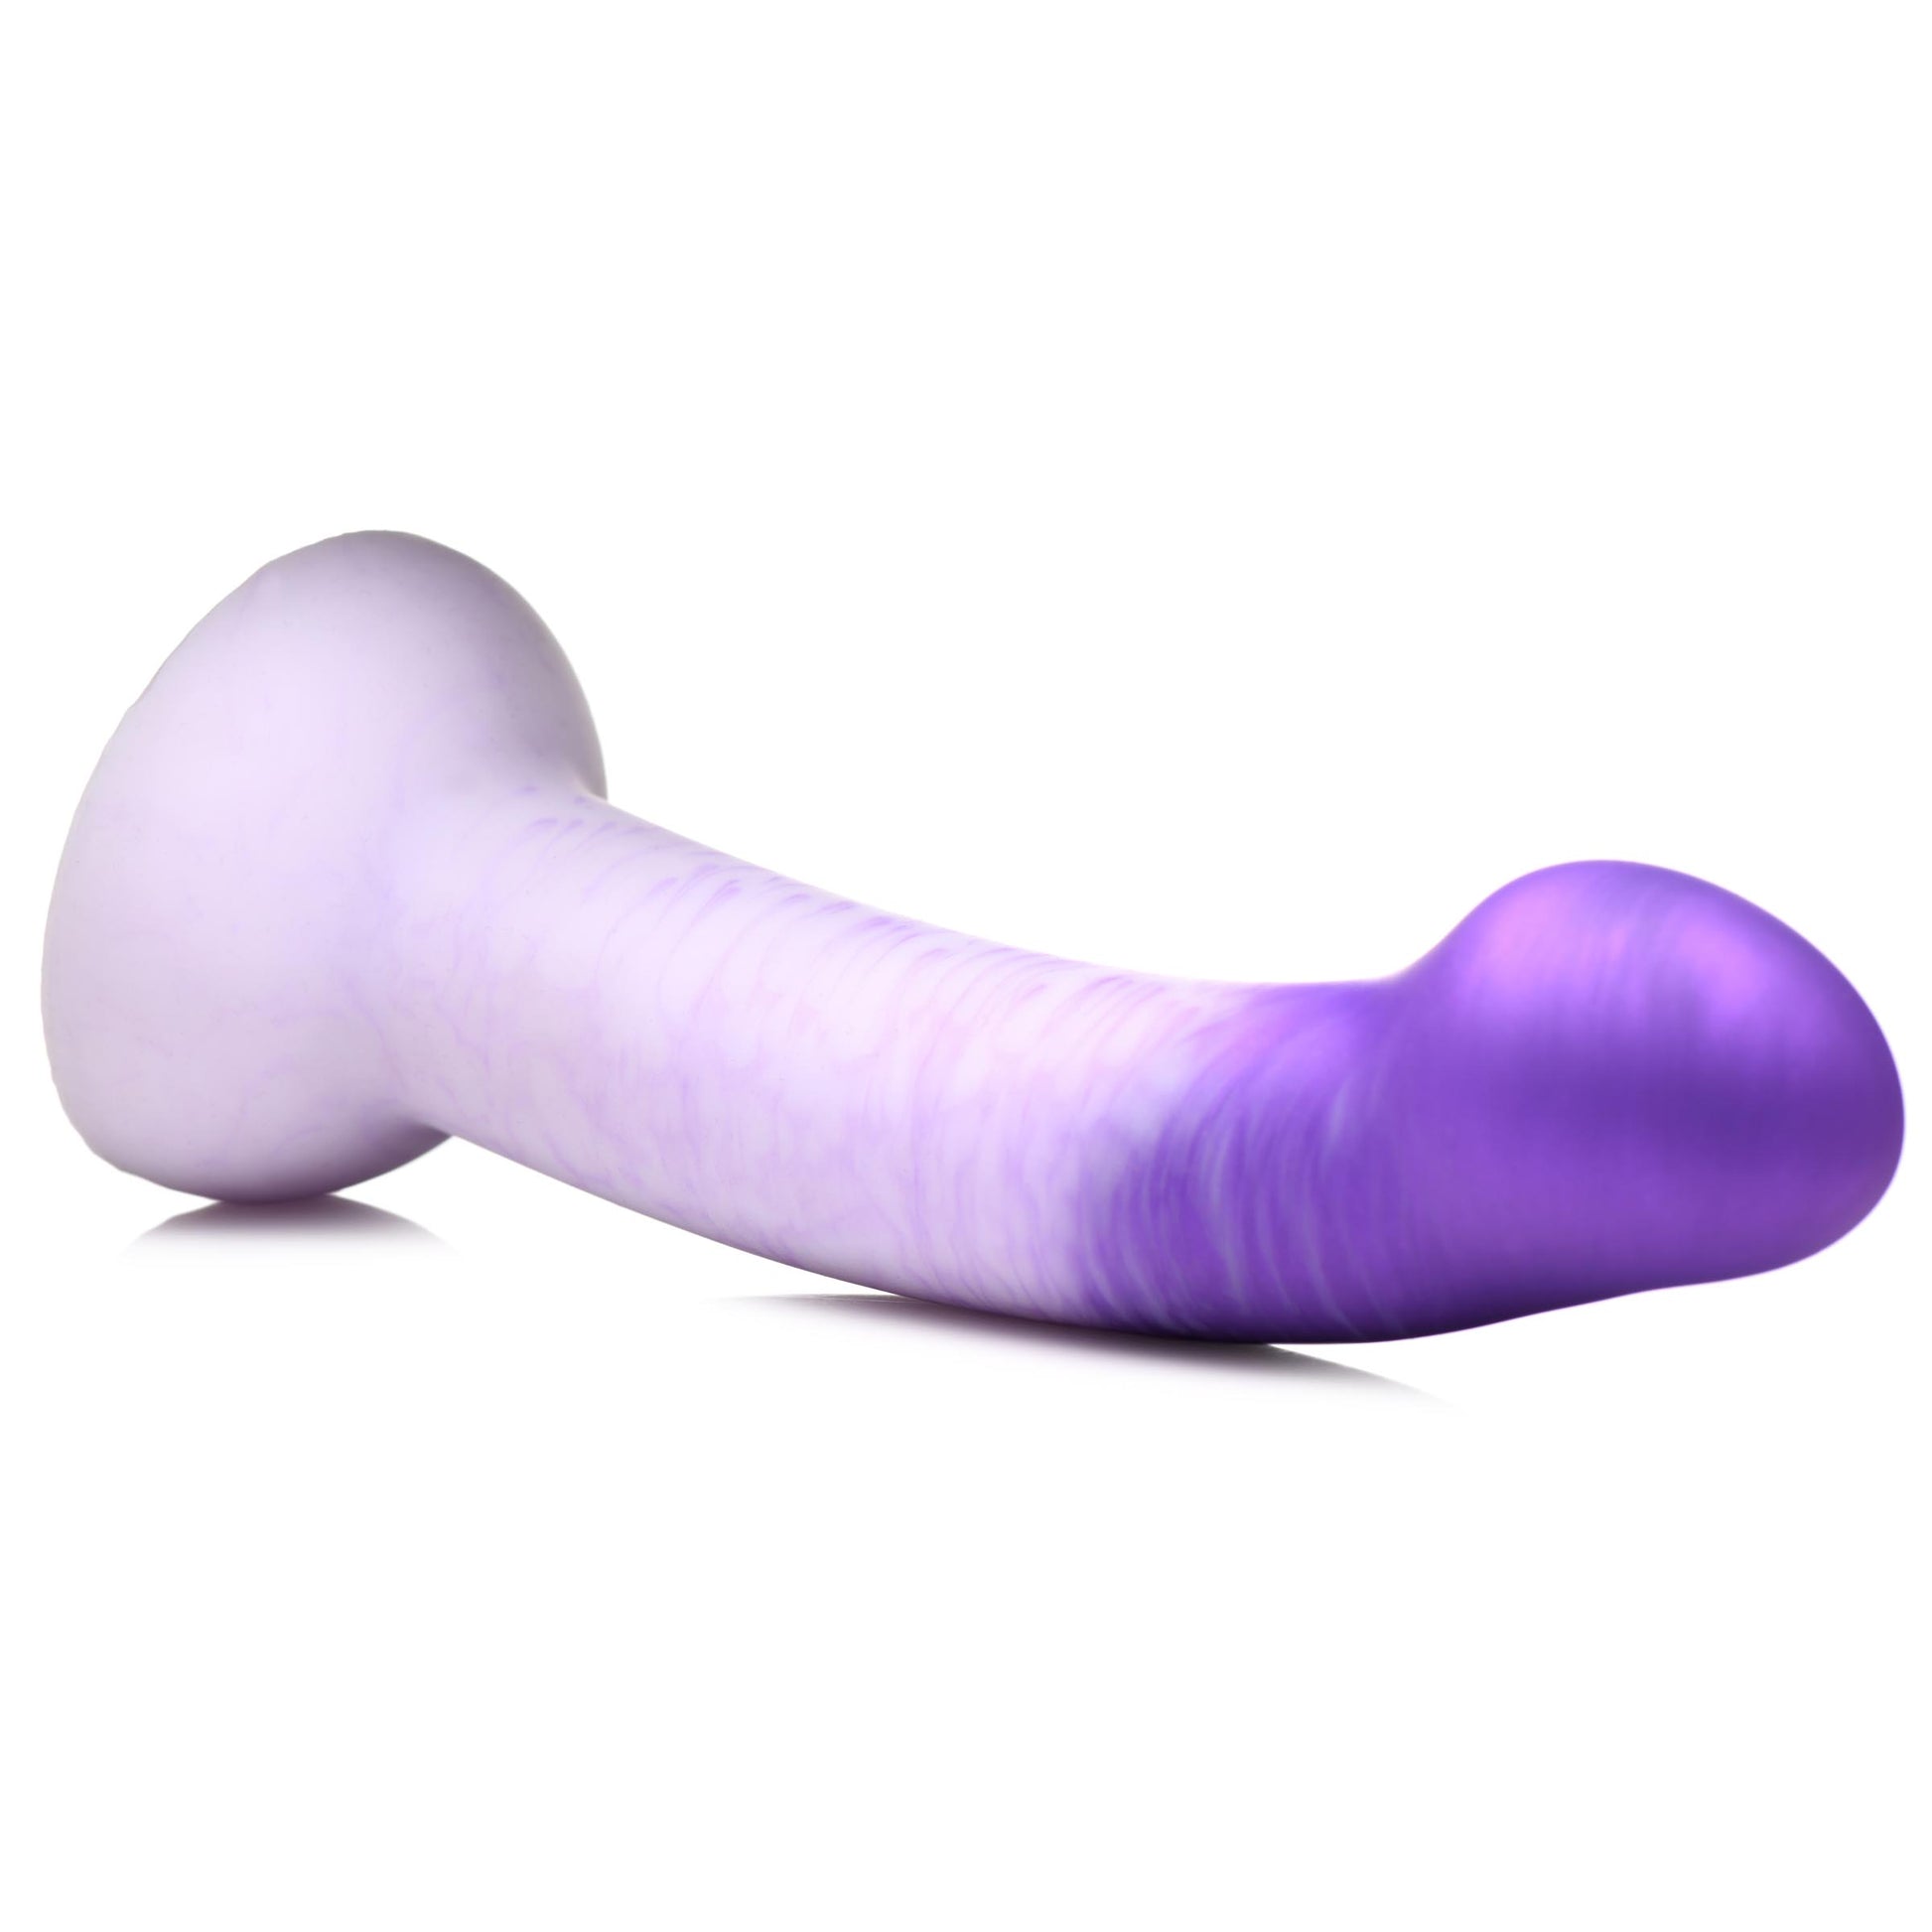 G-Swirl G-Spot Silicone Dildo - Purple - UABDSM